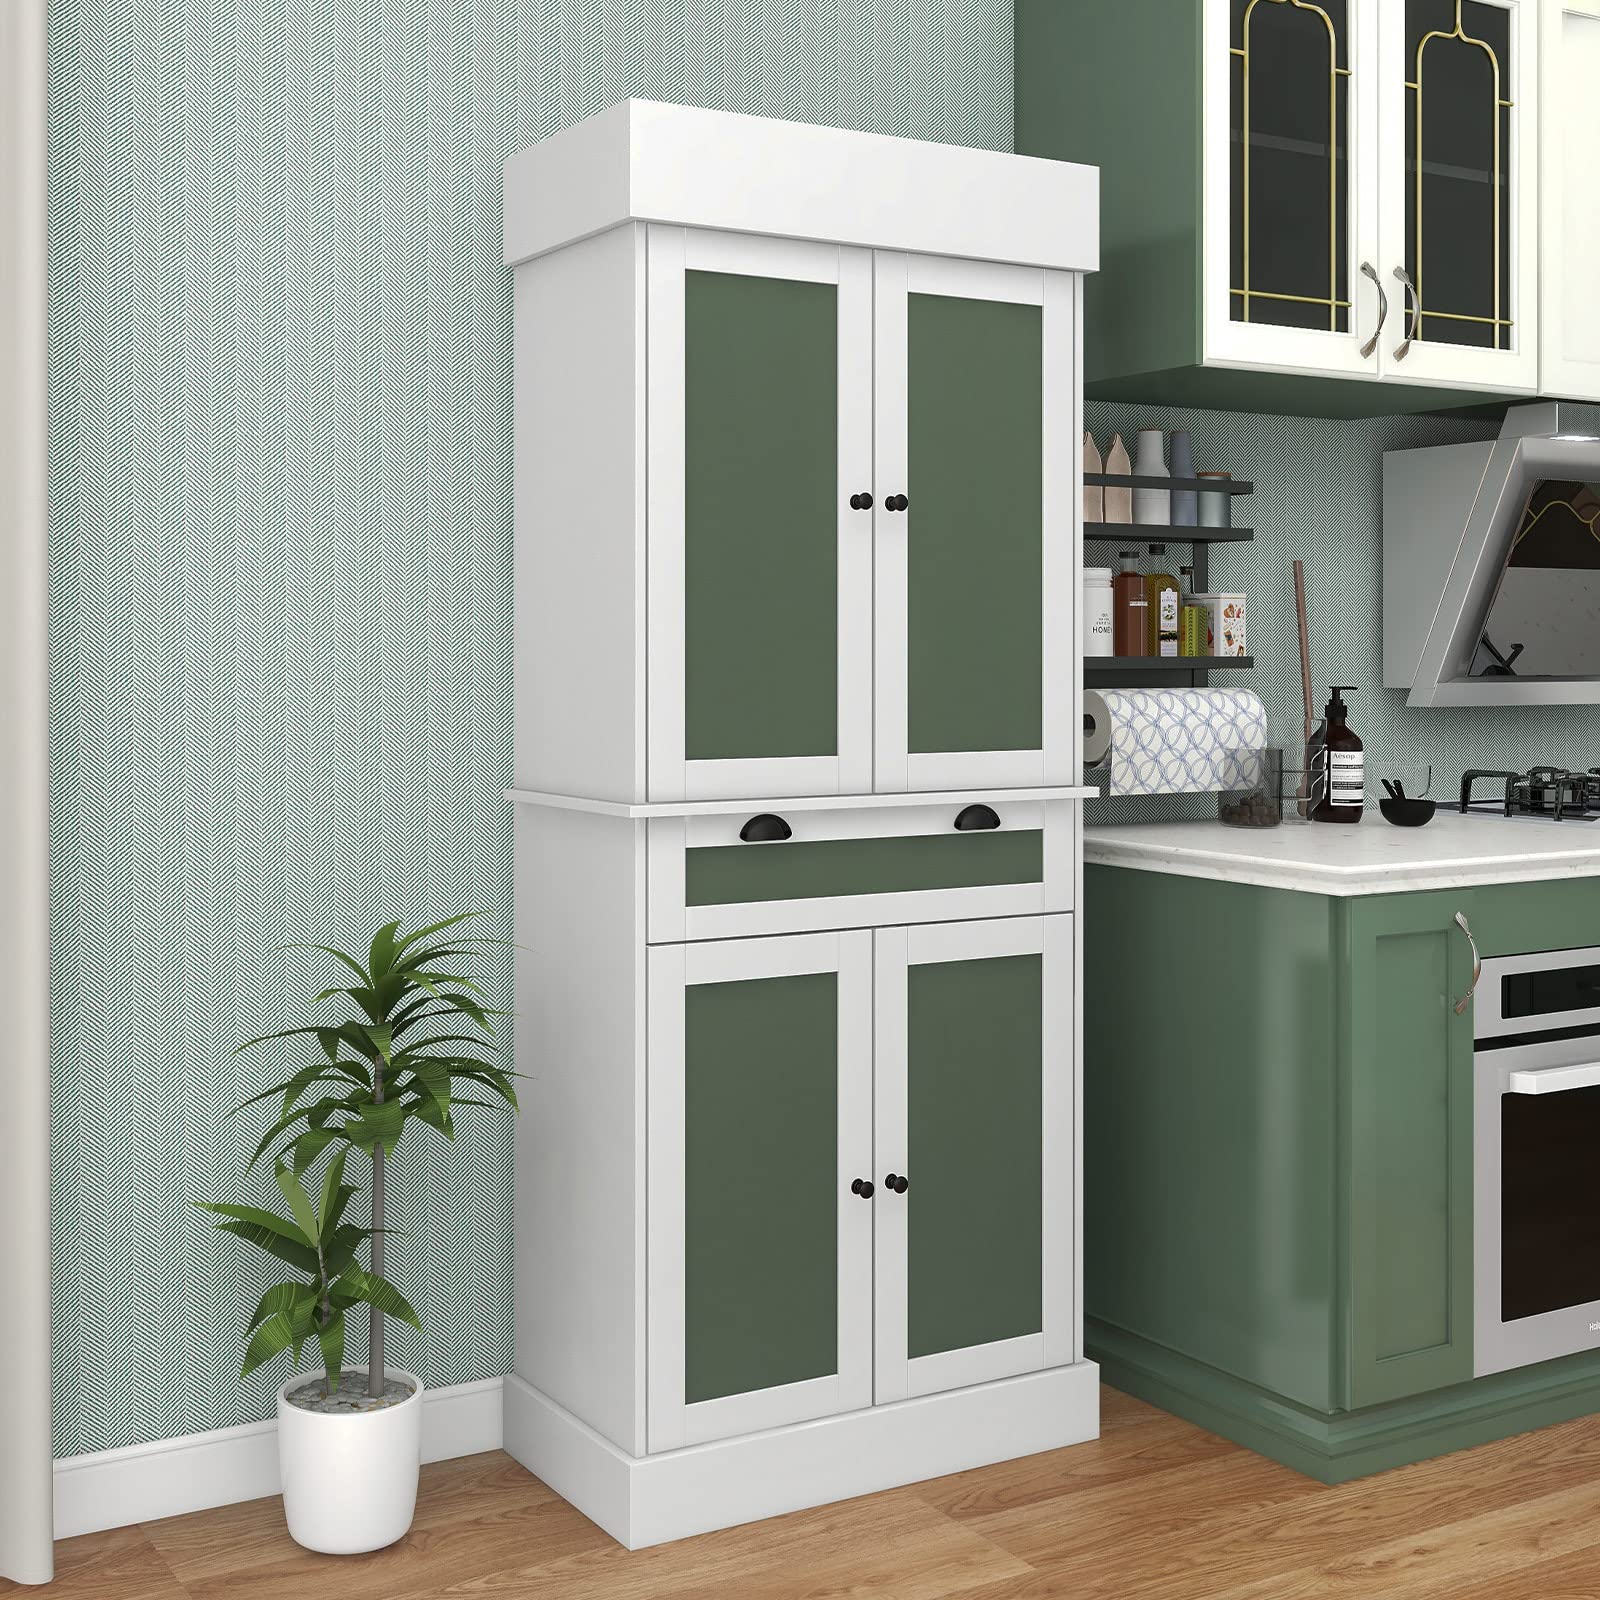 Giantex Kitchen Pantry Cabinet, 72" Tall Buffet Cupboard